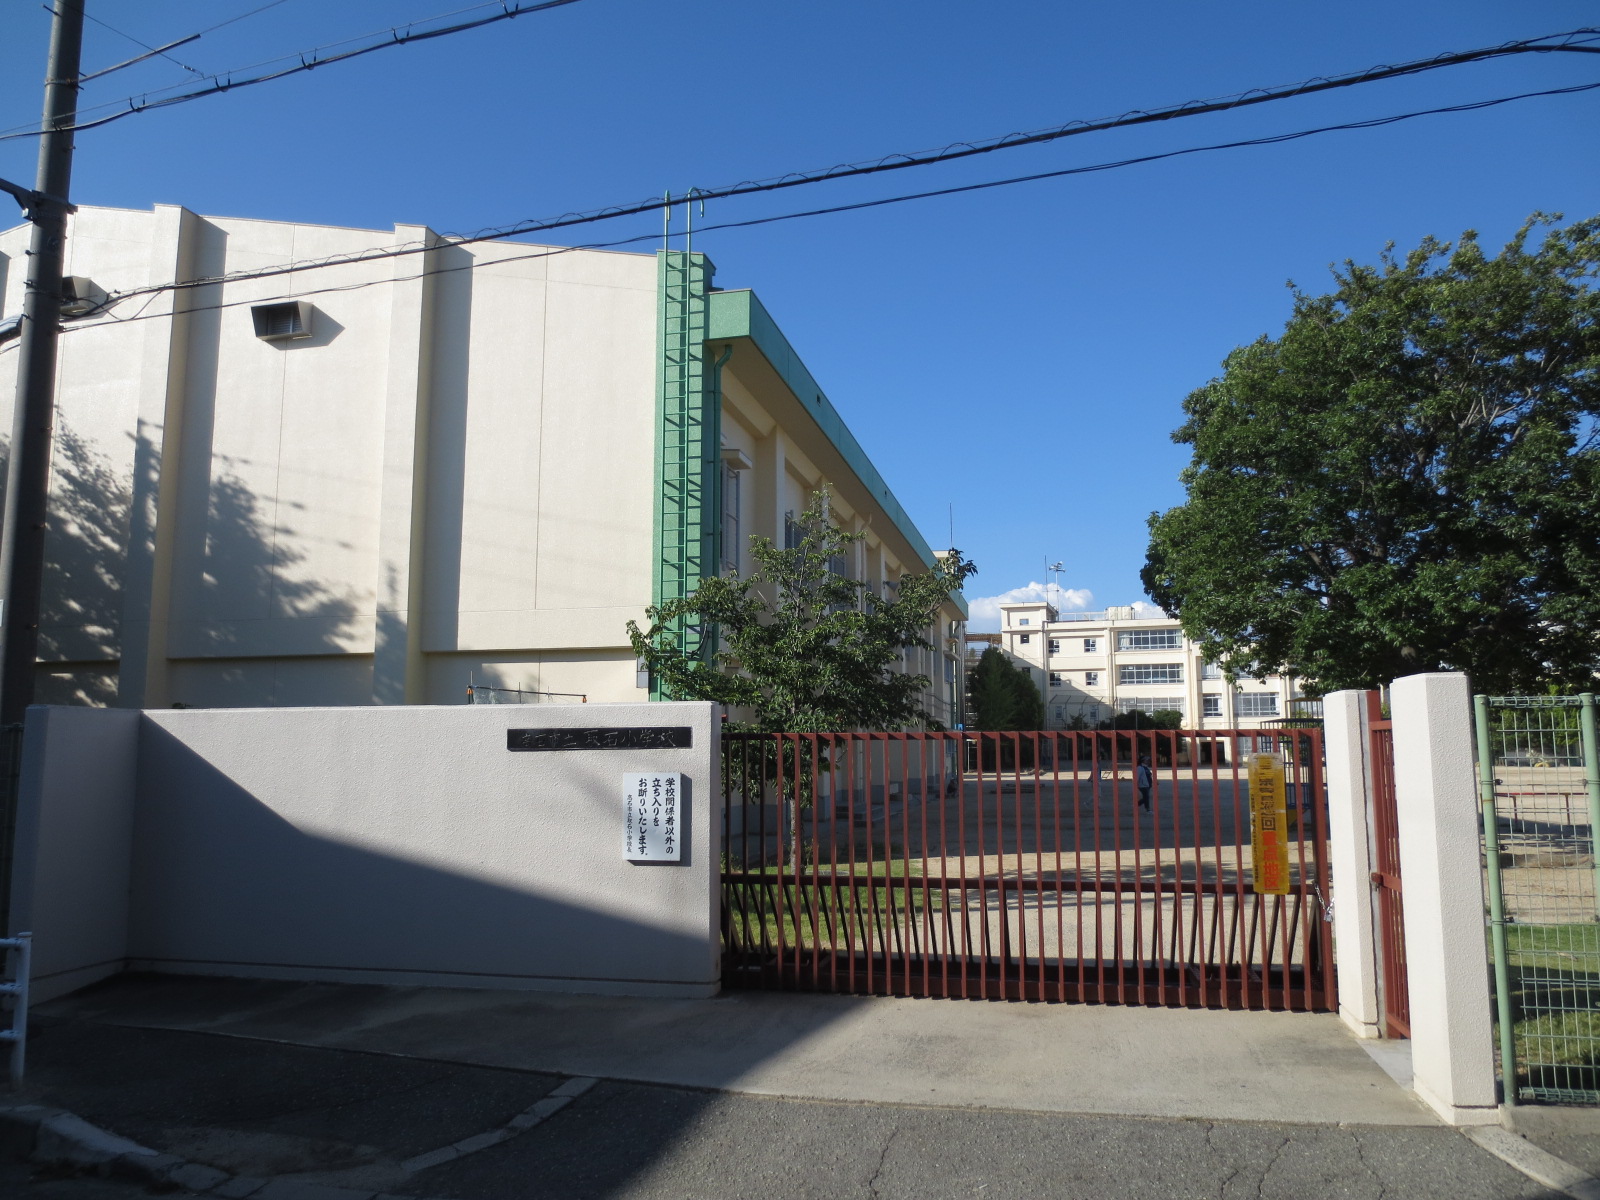 Primary school. Takaishi Municipal Toriishi elementary school (elementary school) up to 350m